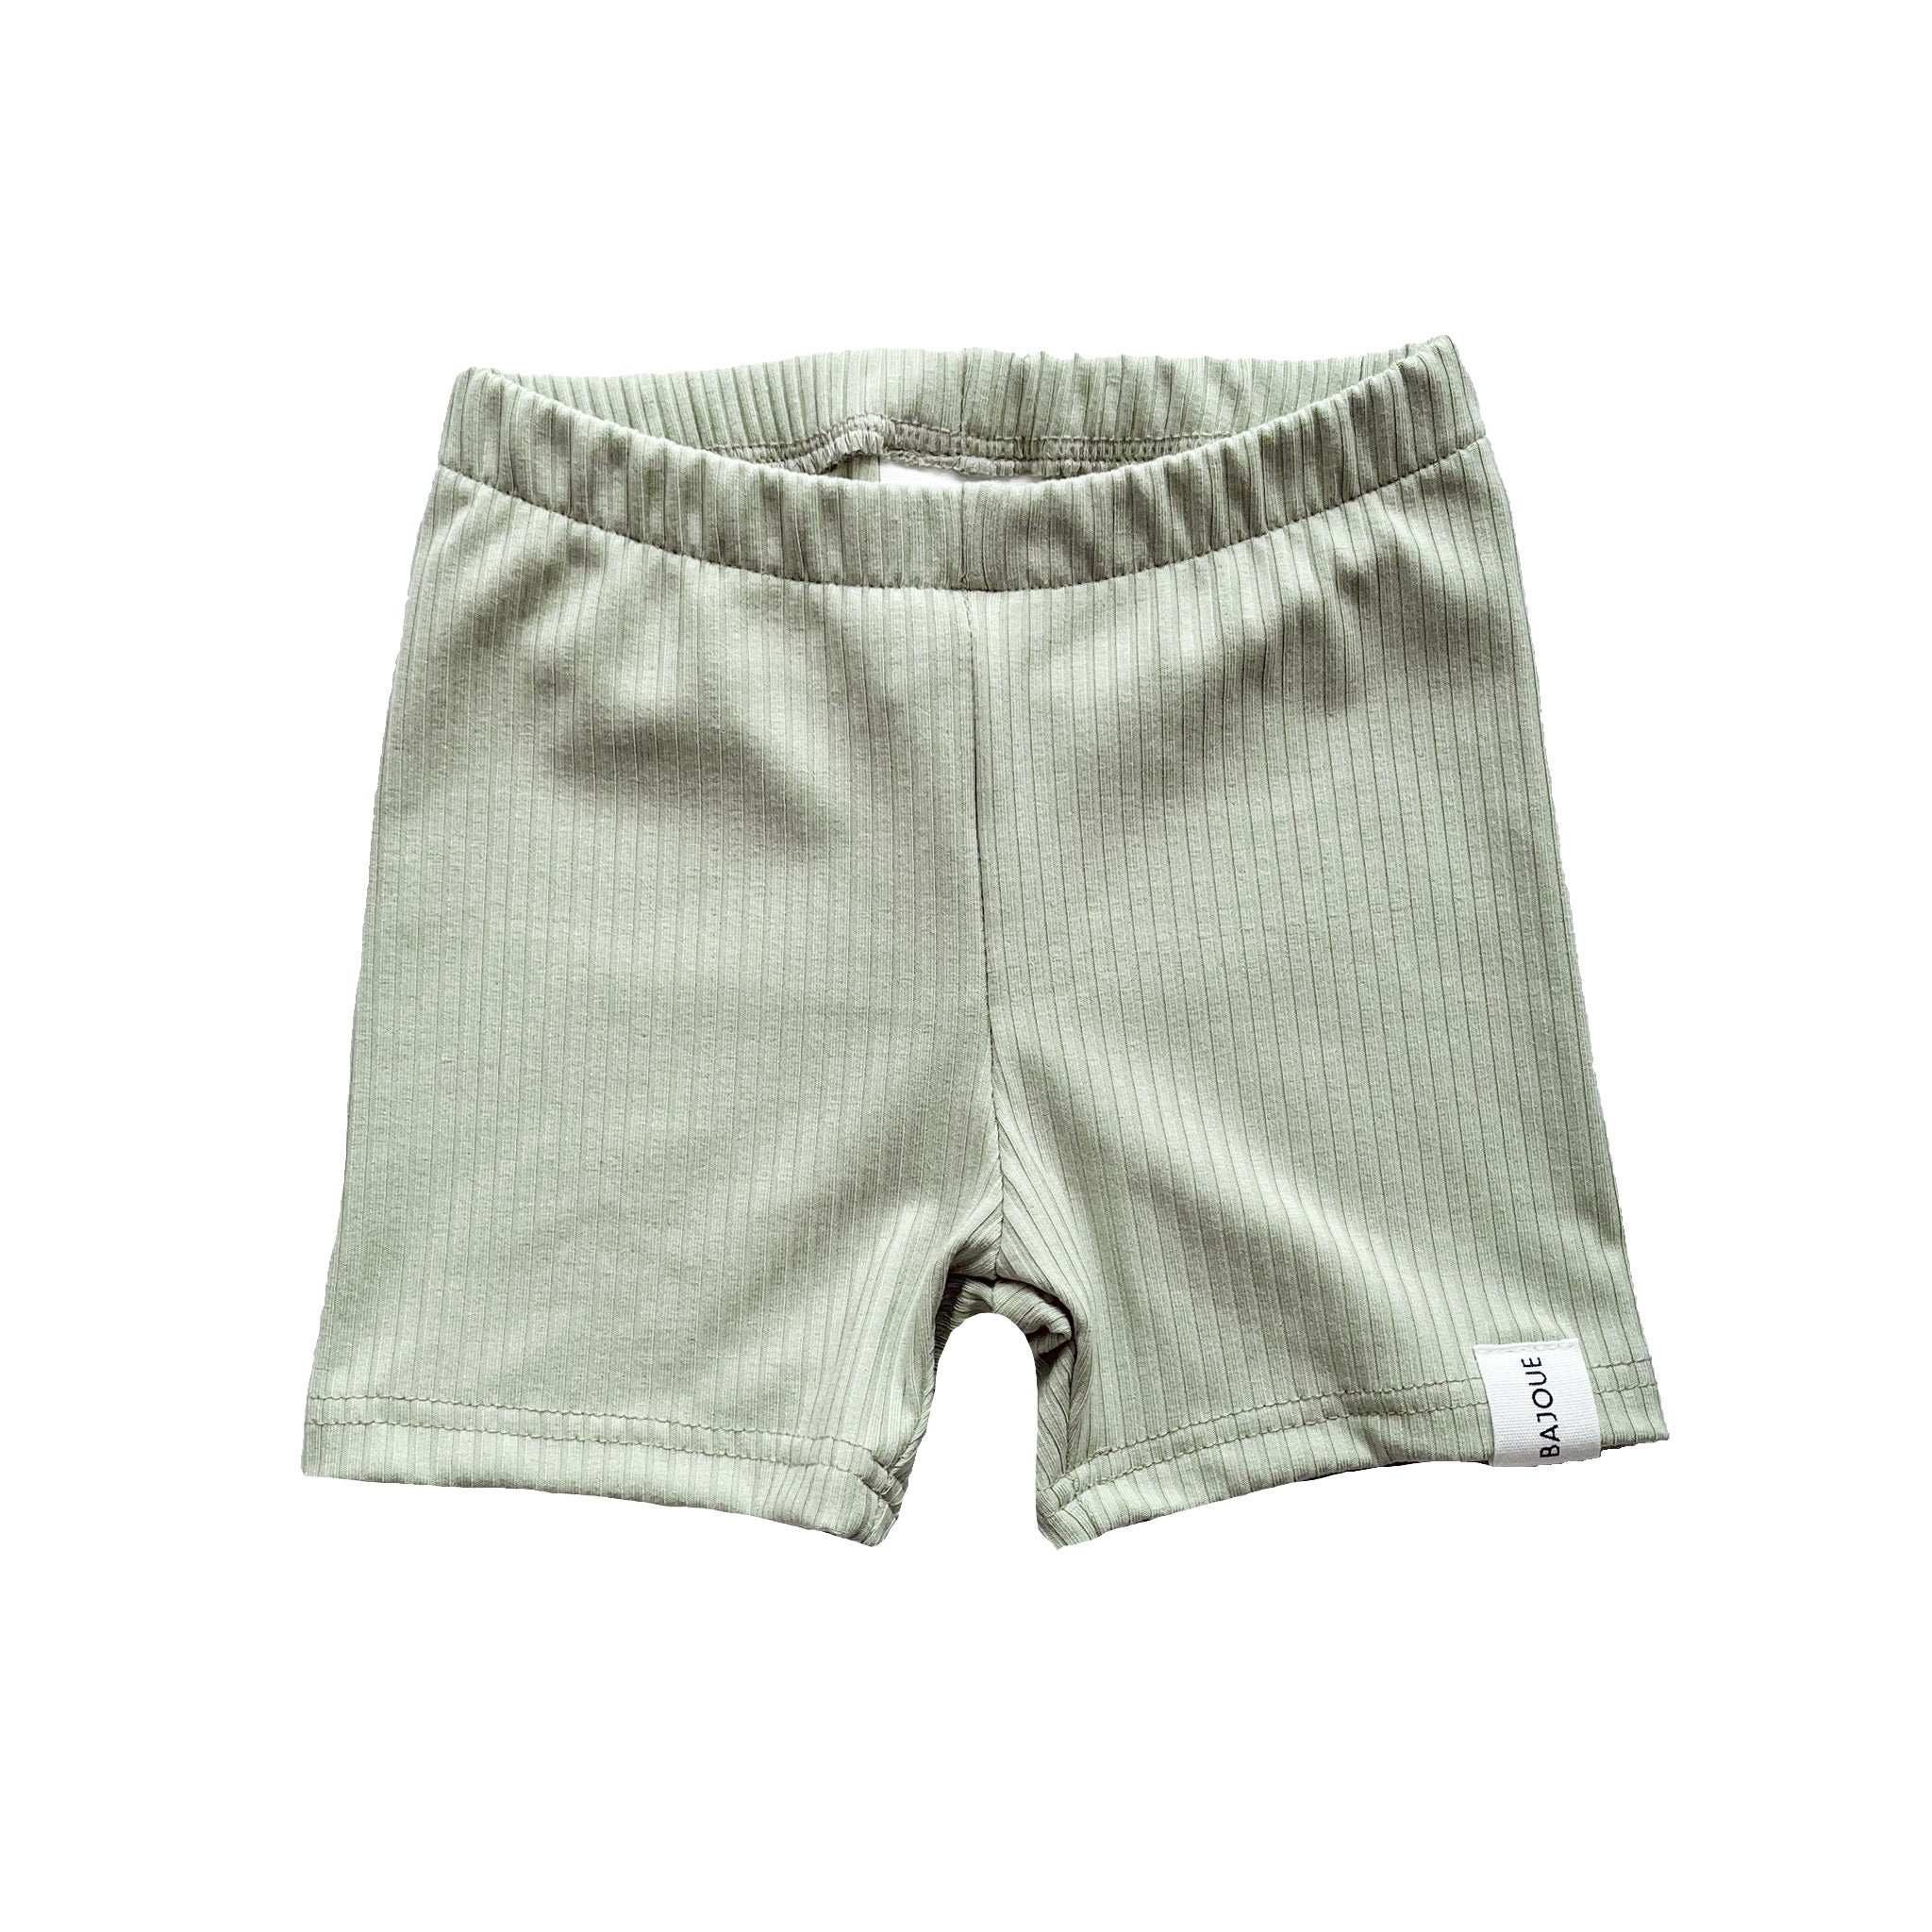 Unisex bamboo shorts - Margarita